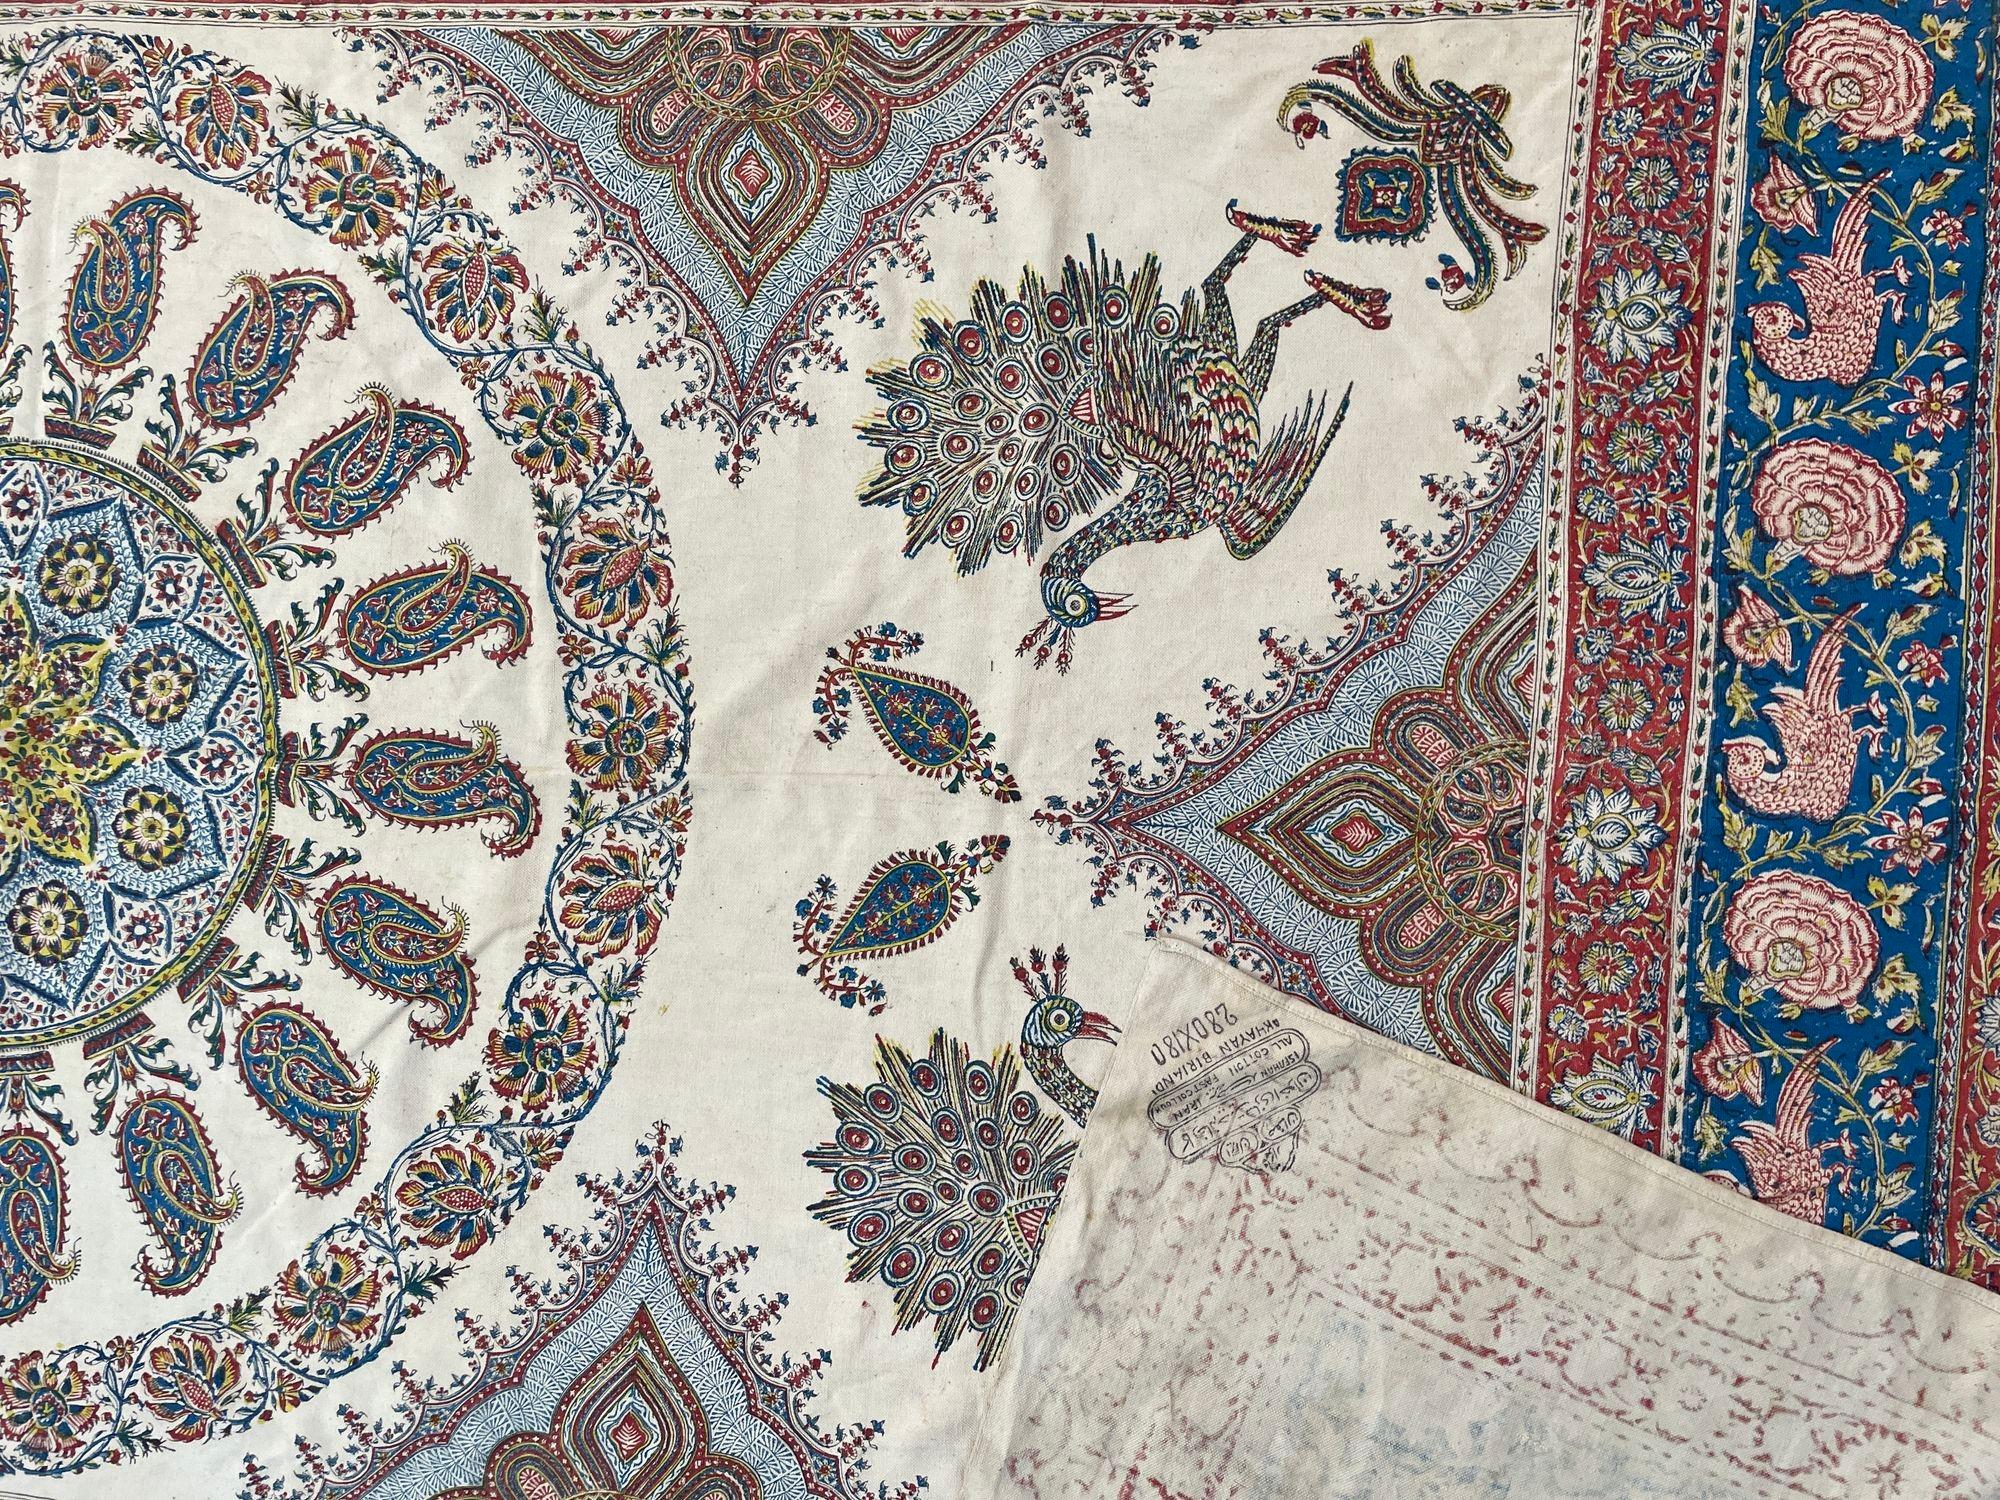 Large Isfahan Ghalamkar Persian Paisley Textile Block Printed 1950s For Sale 5